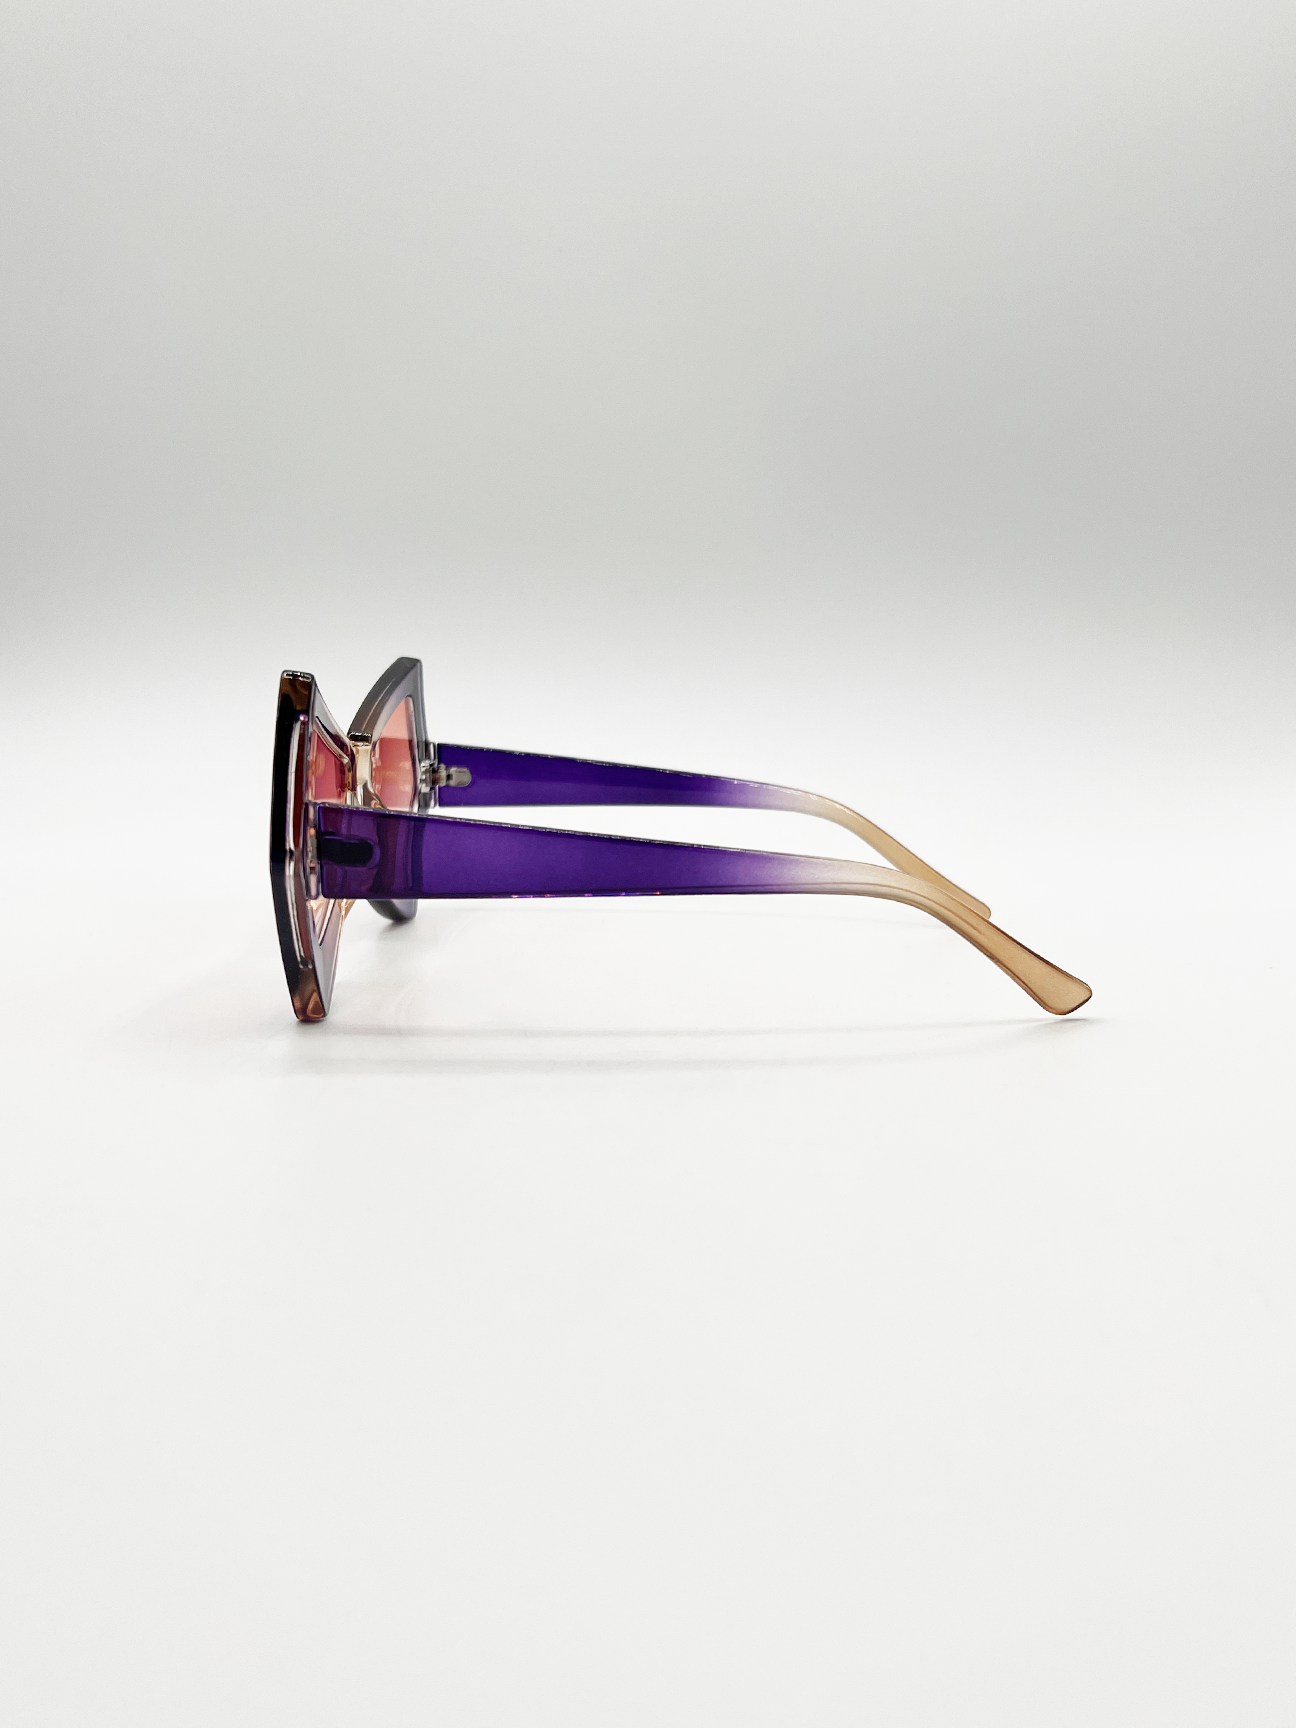 2 Tone Angular Sunglasses in Purple